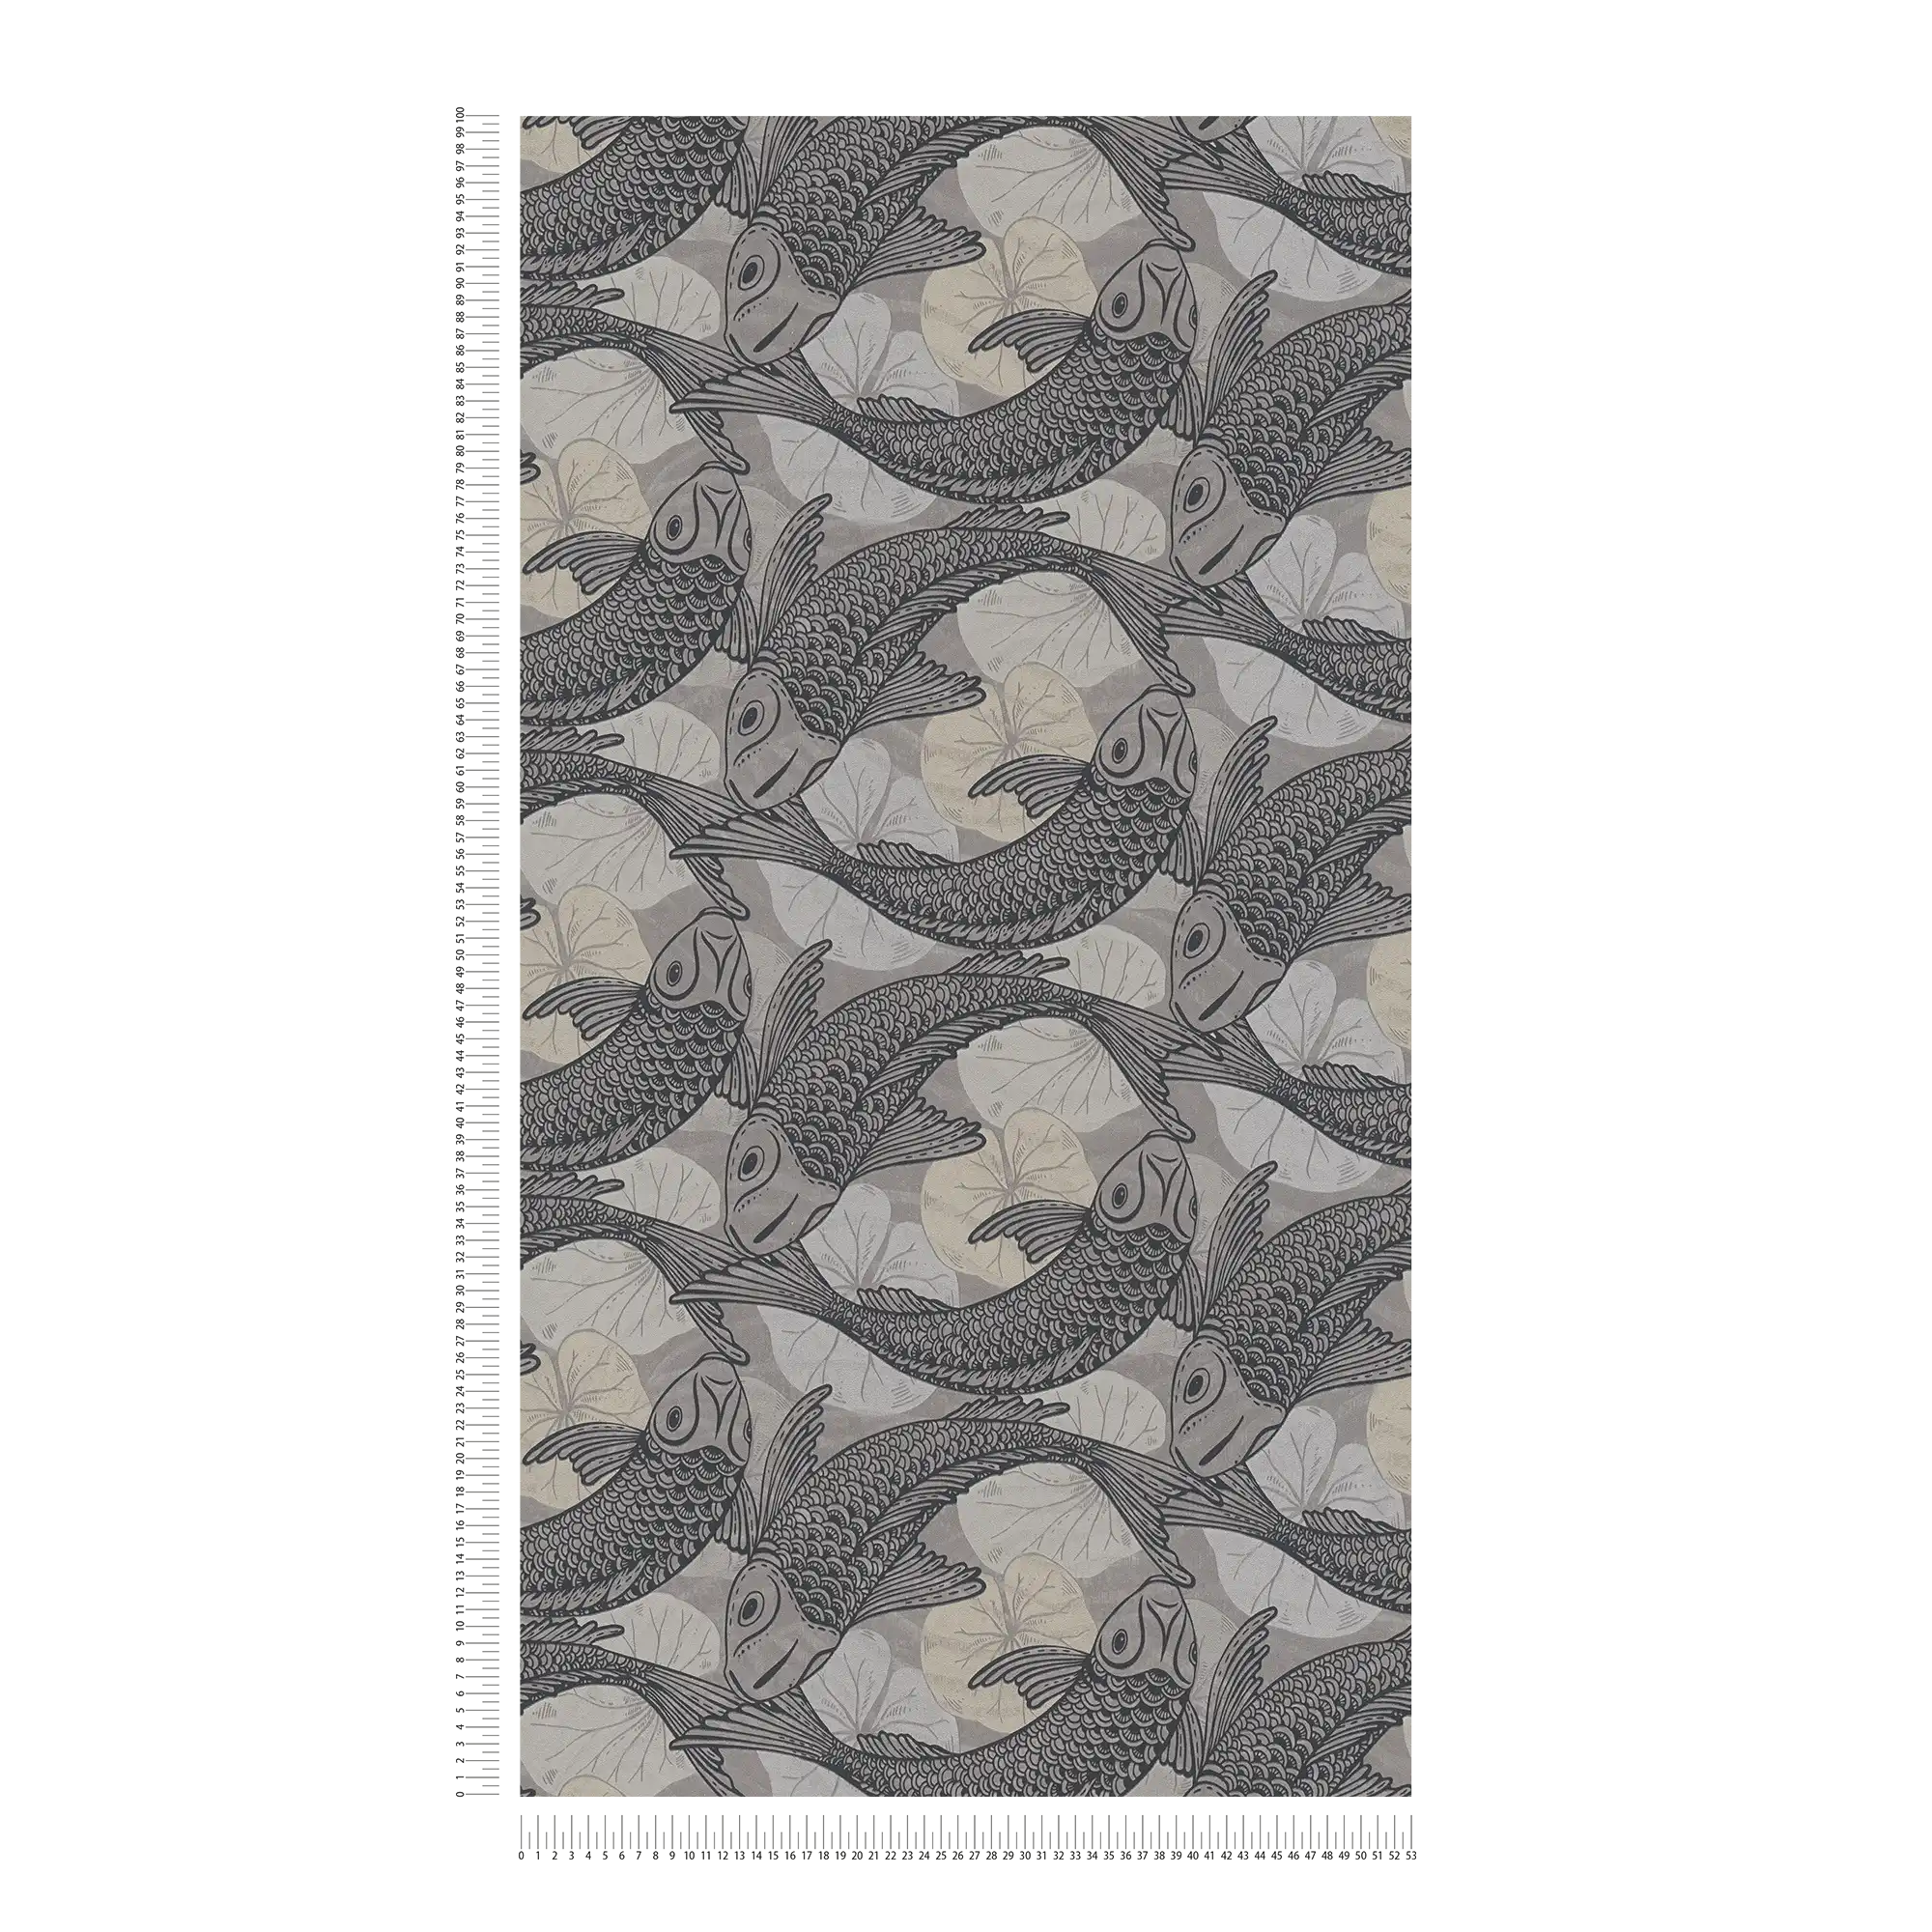             Wallpaper Asian design with koi motif & metallic effect - beige, grey, black
        